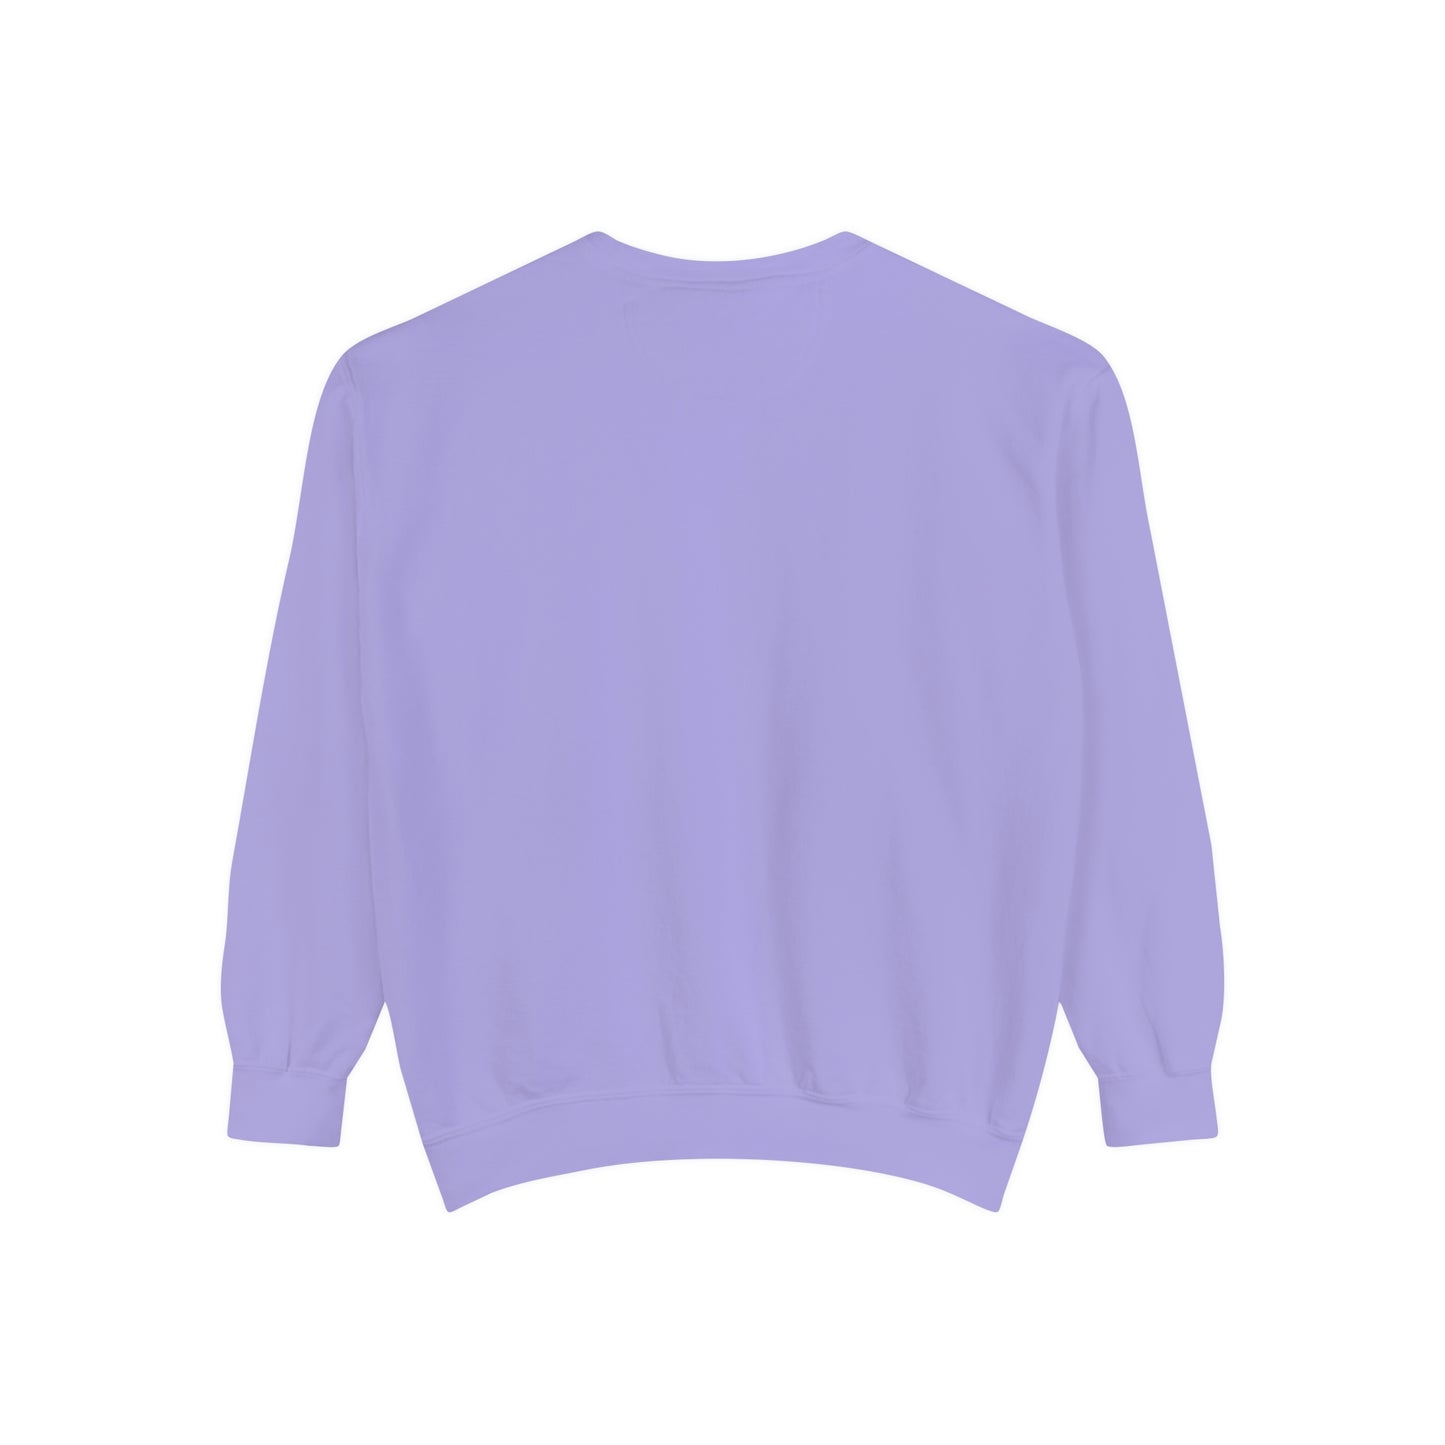 Michigan Upper Peninsula Sweatshirt (w/ Azure UP Outline) | Unisex Garment Dyed